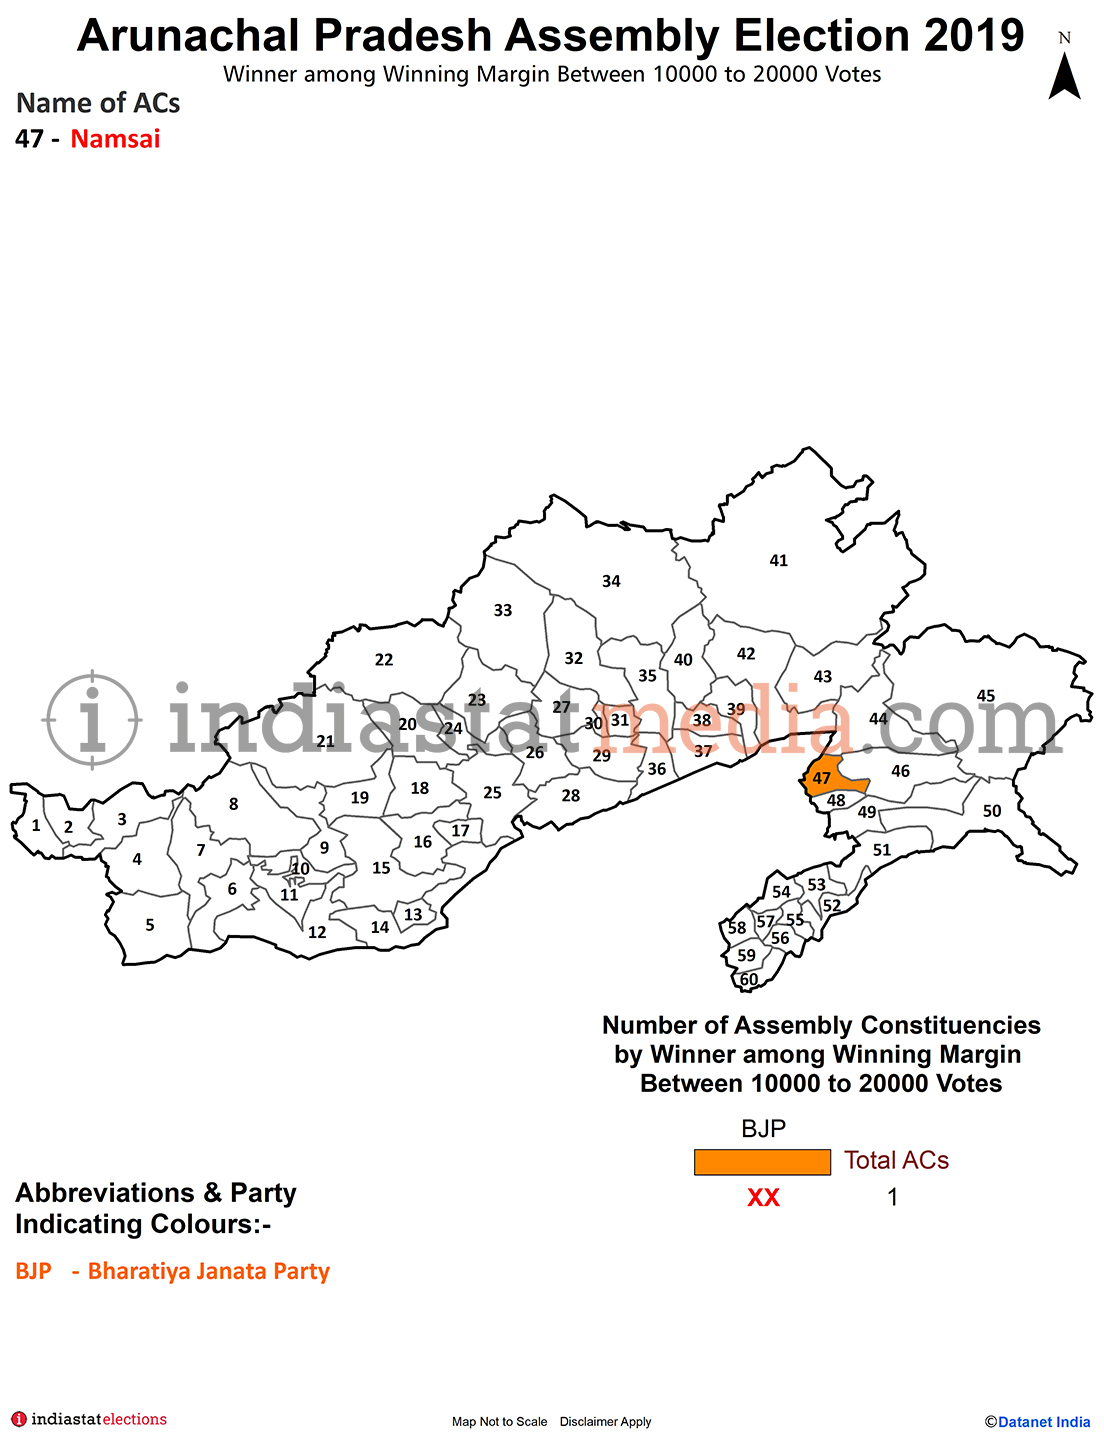 Winner among Winning Margin Between 10000 to 20000 Votes in Arunachal Pradesh (Assembly Election - 2019)